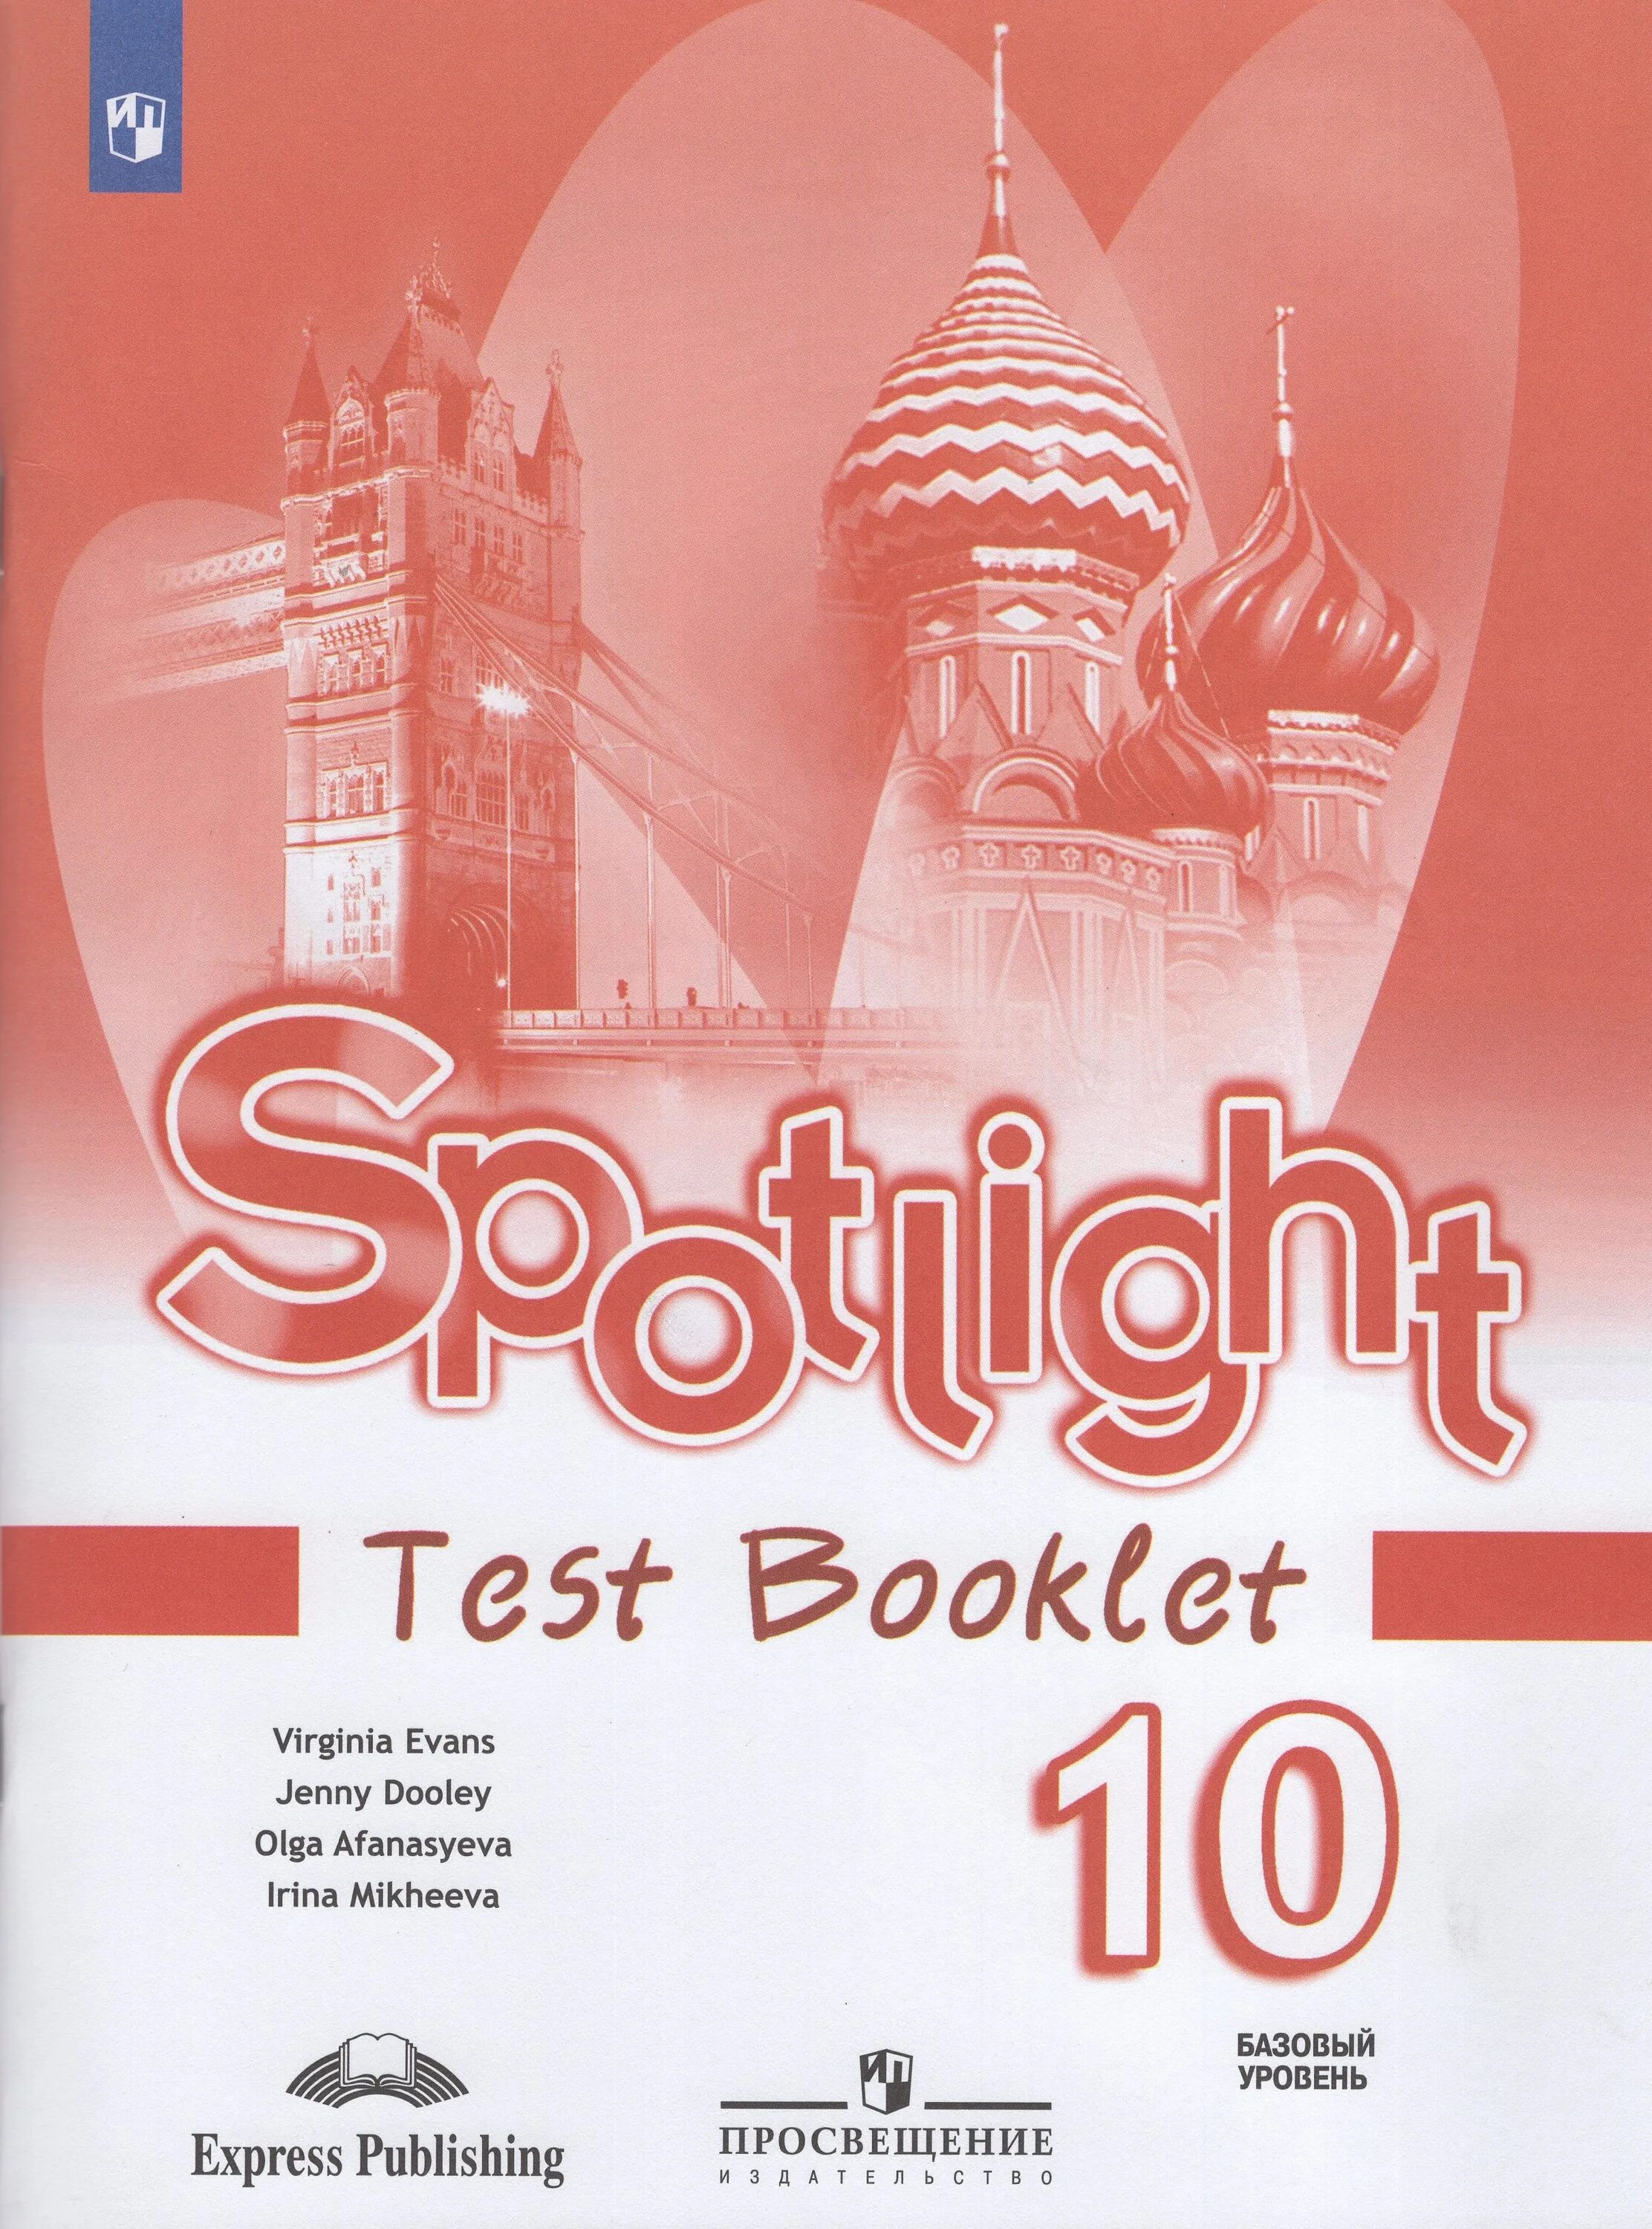 Test booklet 9 класс Spotlight ваулина. Английский язык 9 класс ваулина тест буклет. Спотлайт 11 класс тест буклет. Спотлайт 9 класс тест буклет.